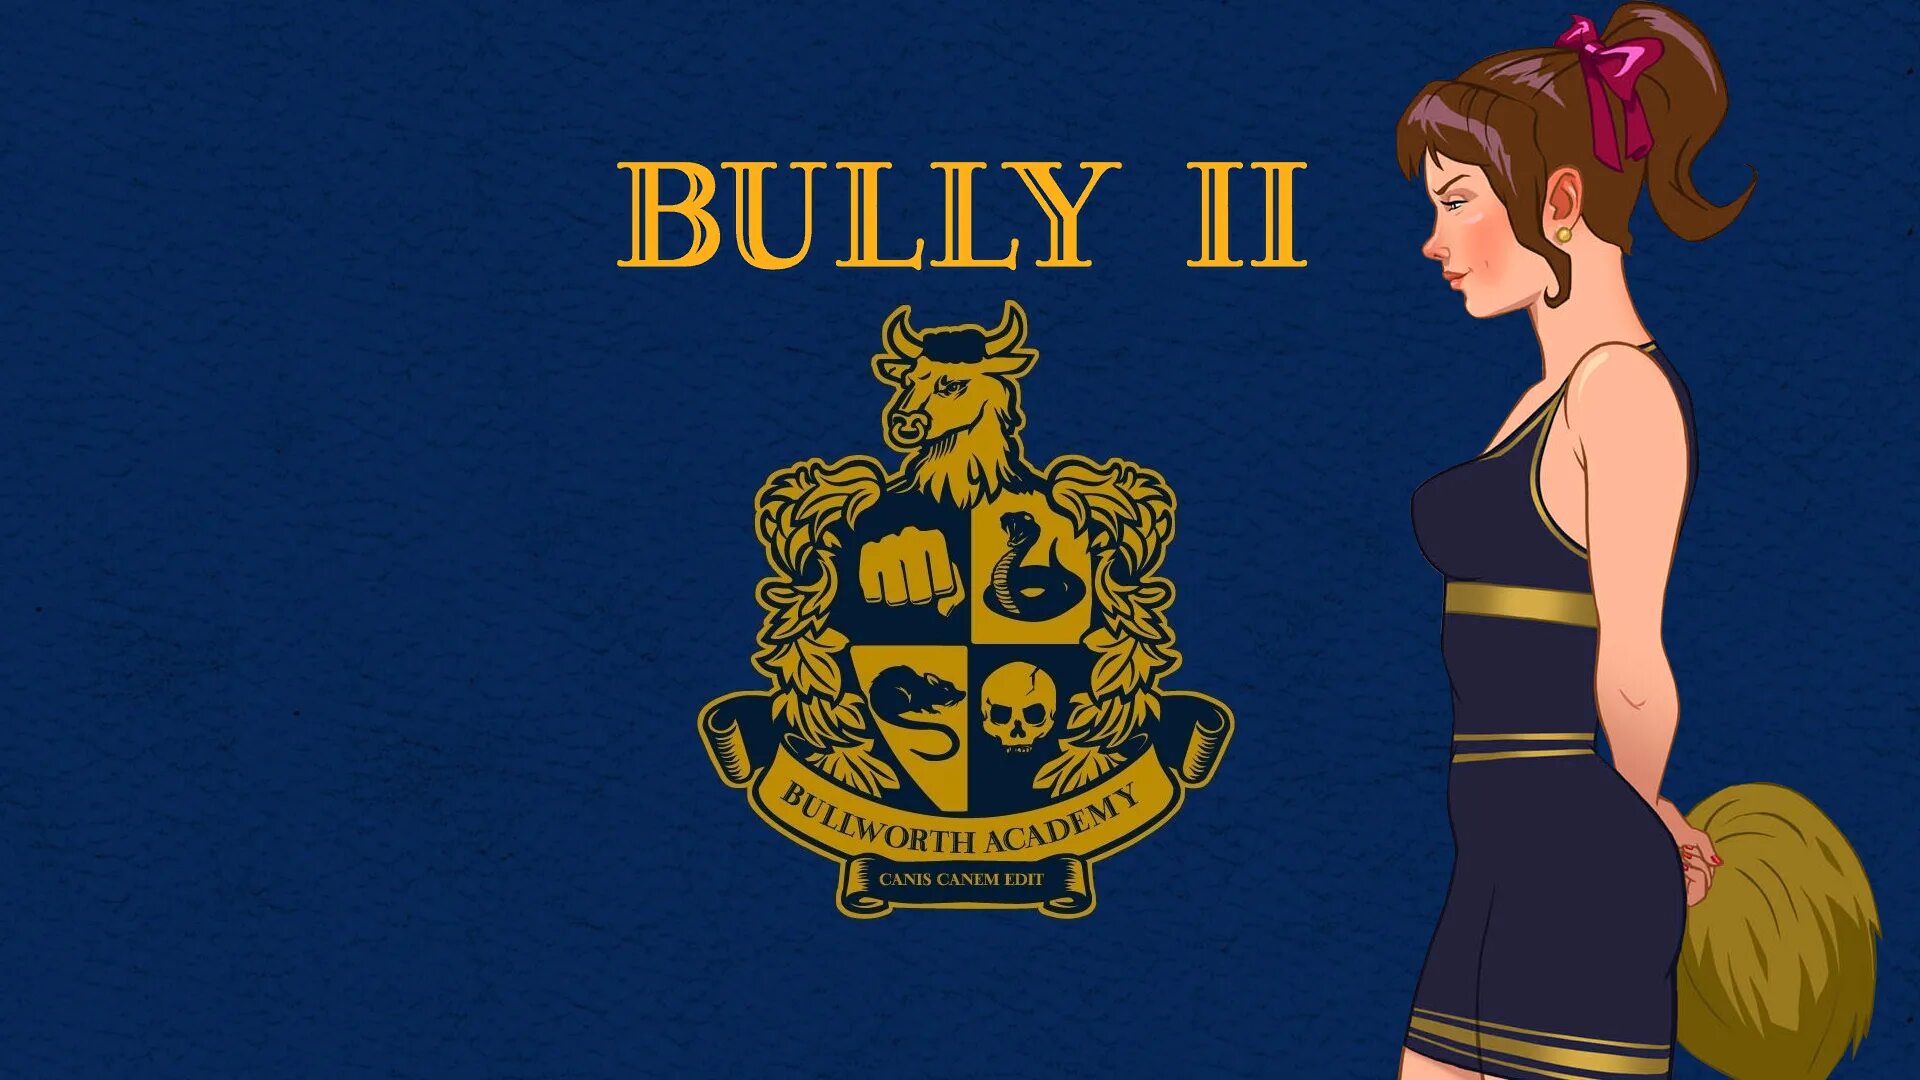 Bang my bully. Булли 2. Bully scholarship Edition Мэнди. Игра Bully 2. Булли рокстар.